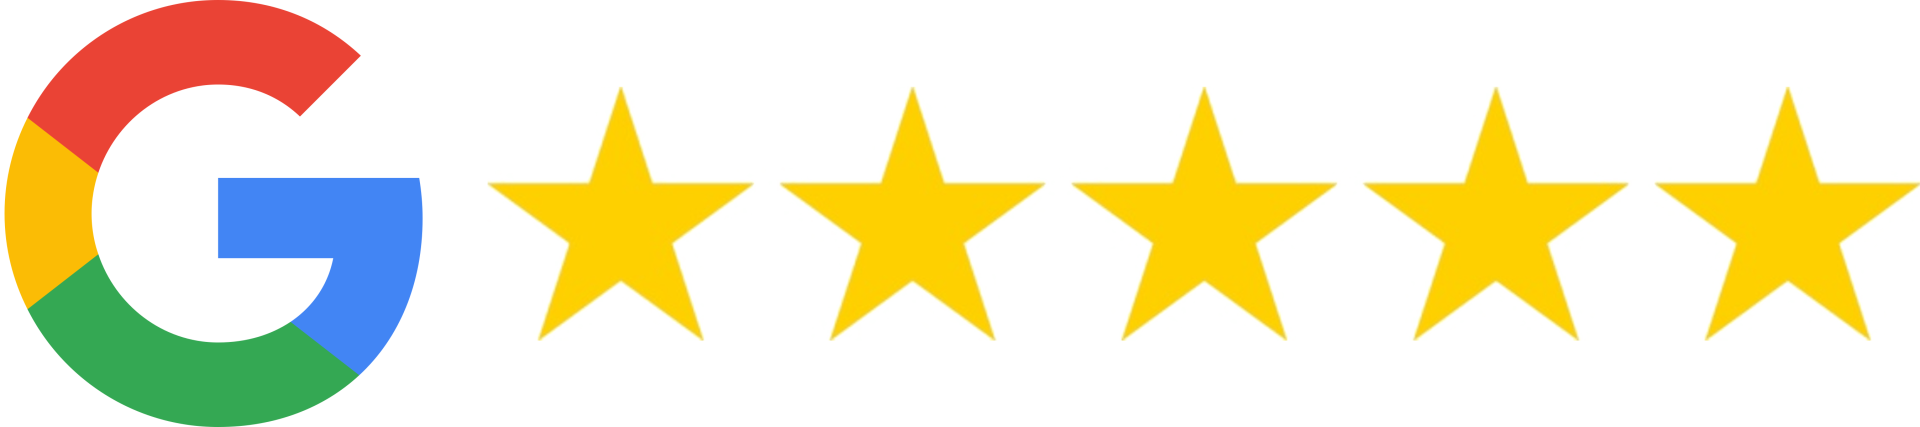 Google Logo with five stars